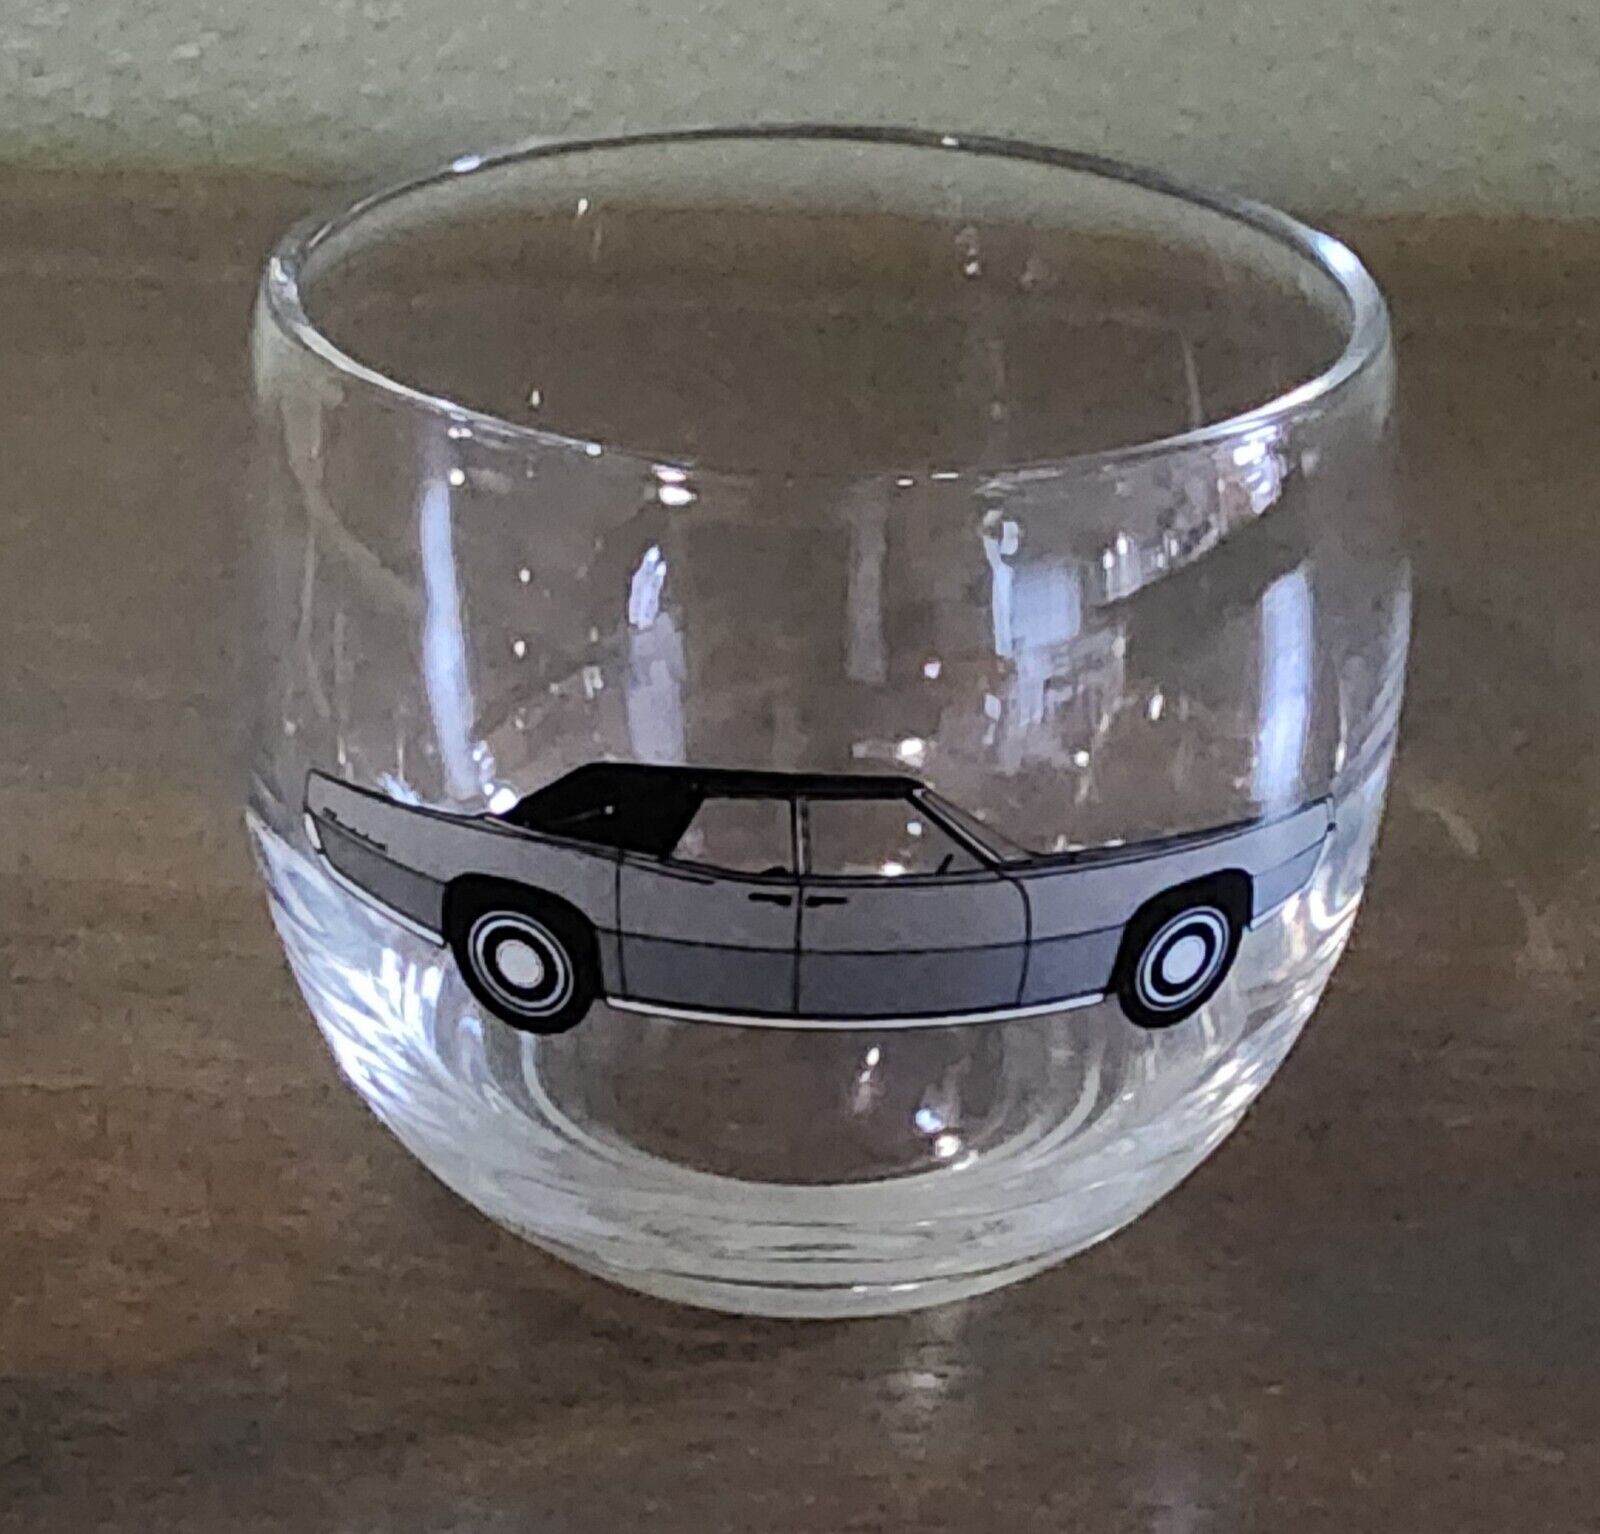 1960s Chevrolet original dealership salesmans promo glass